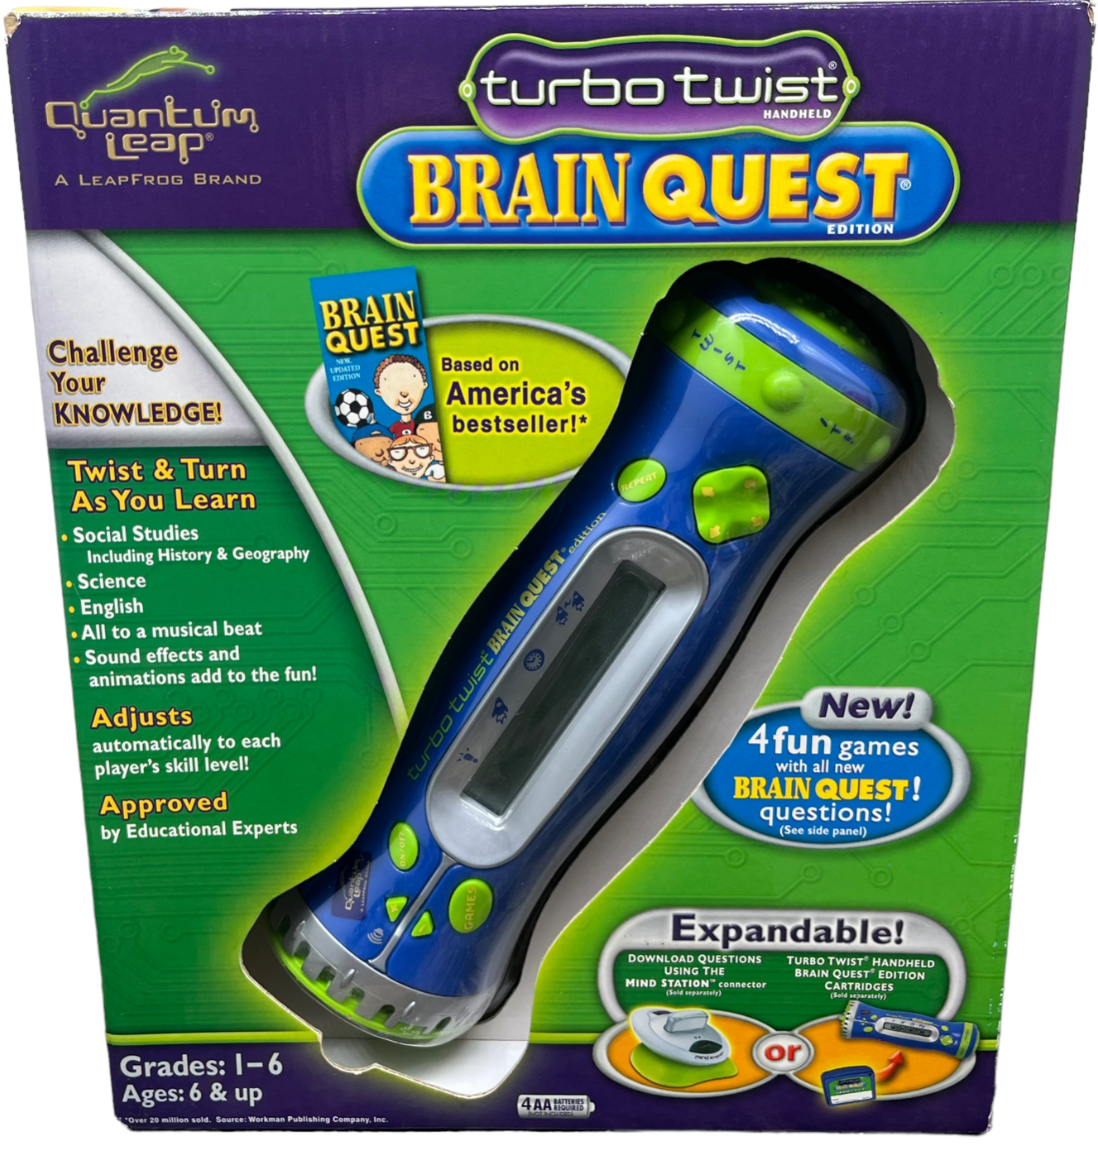 Retro Review: Leapfrog iQuest Handheld & Turbo Twist Brain Quest 